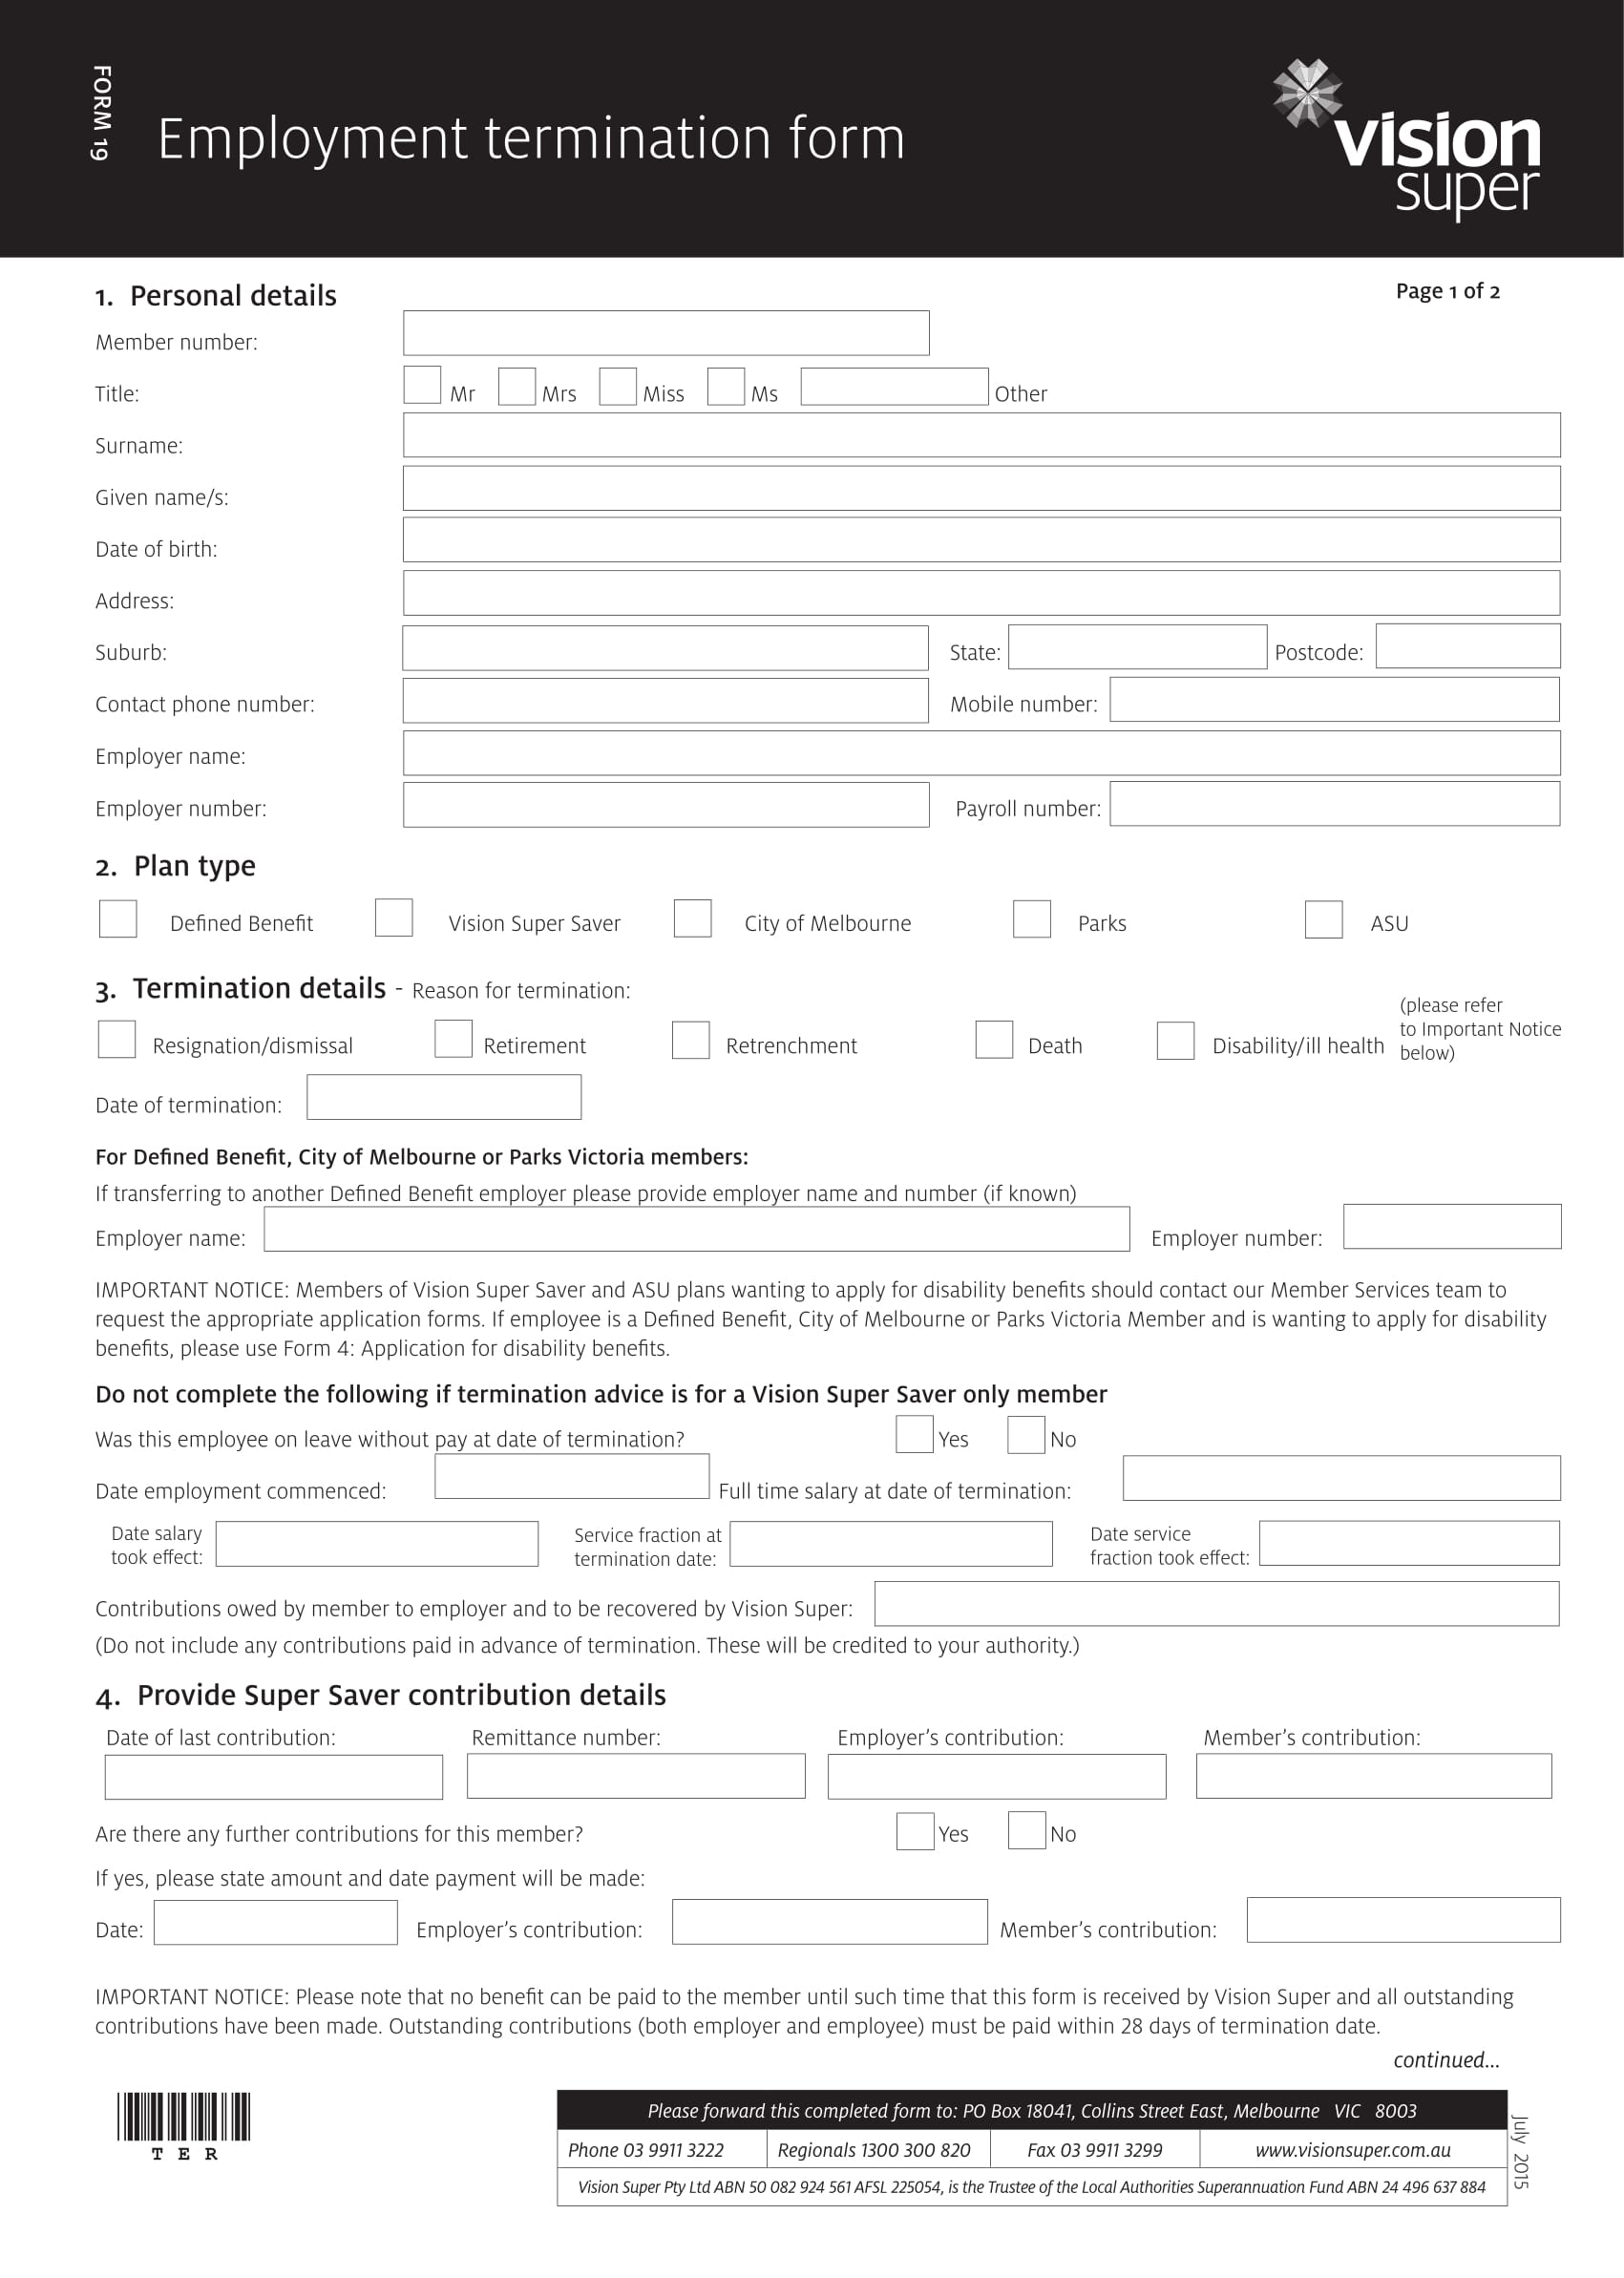 employment termination form sample 1